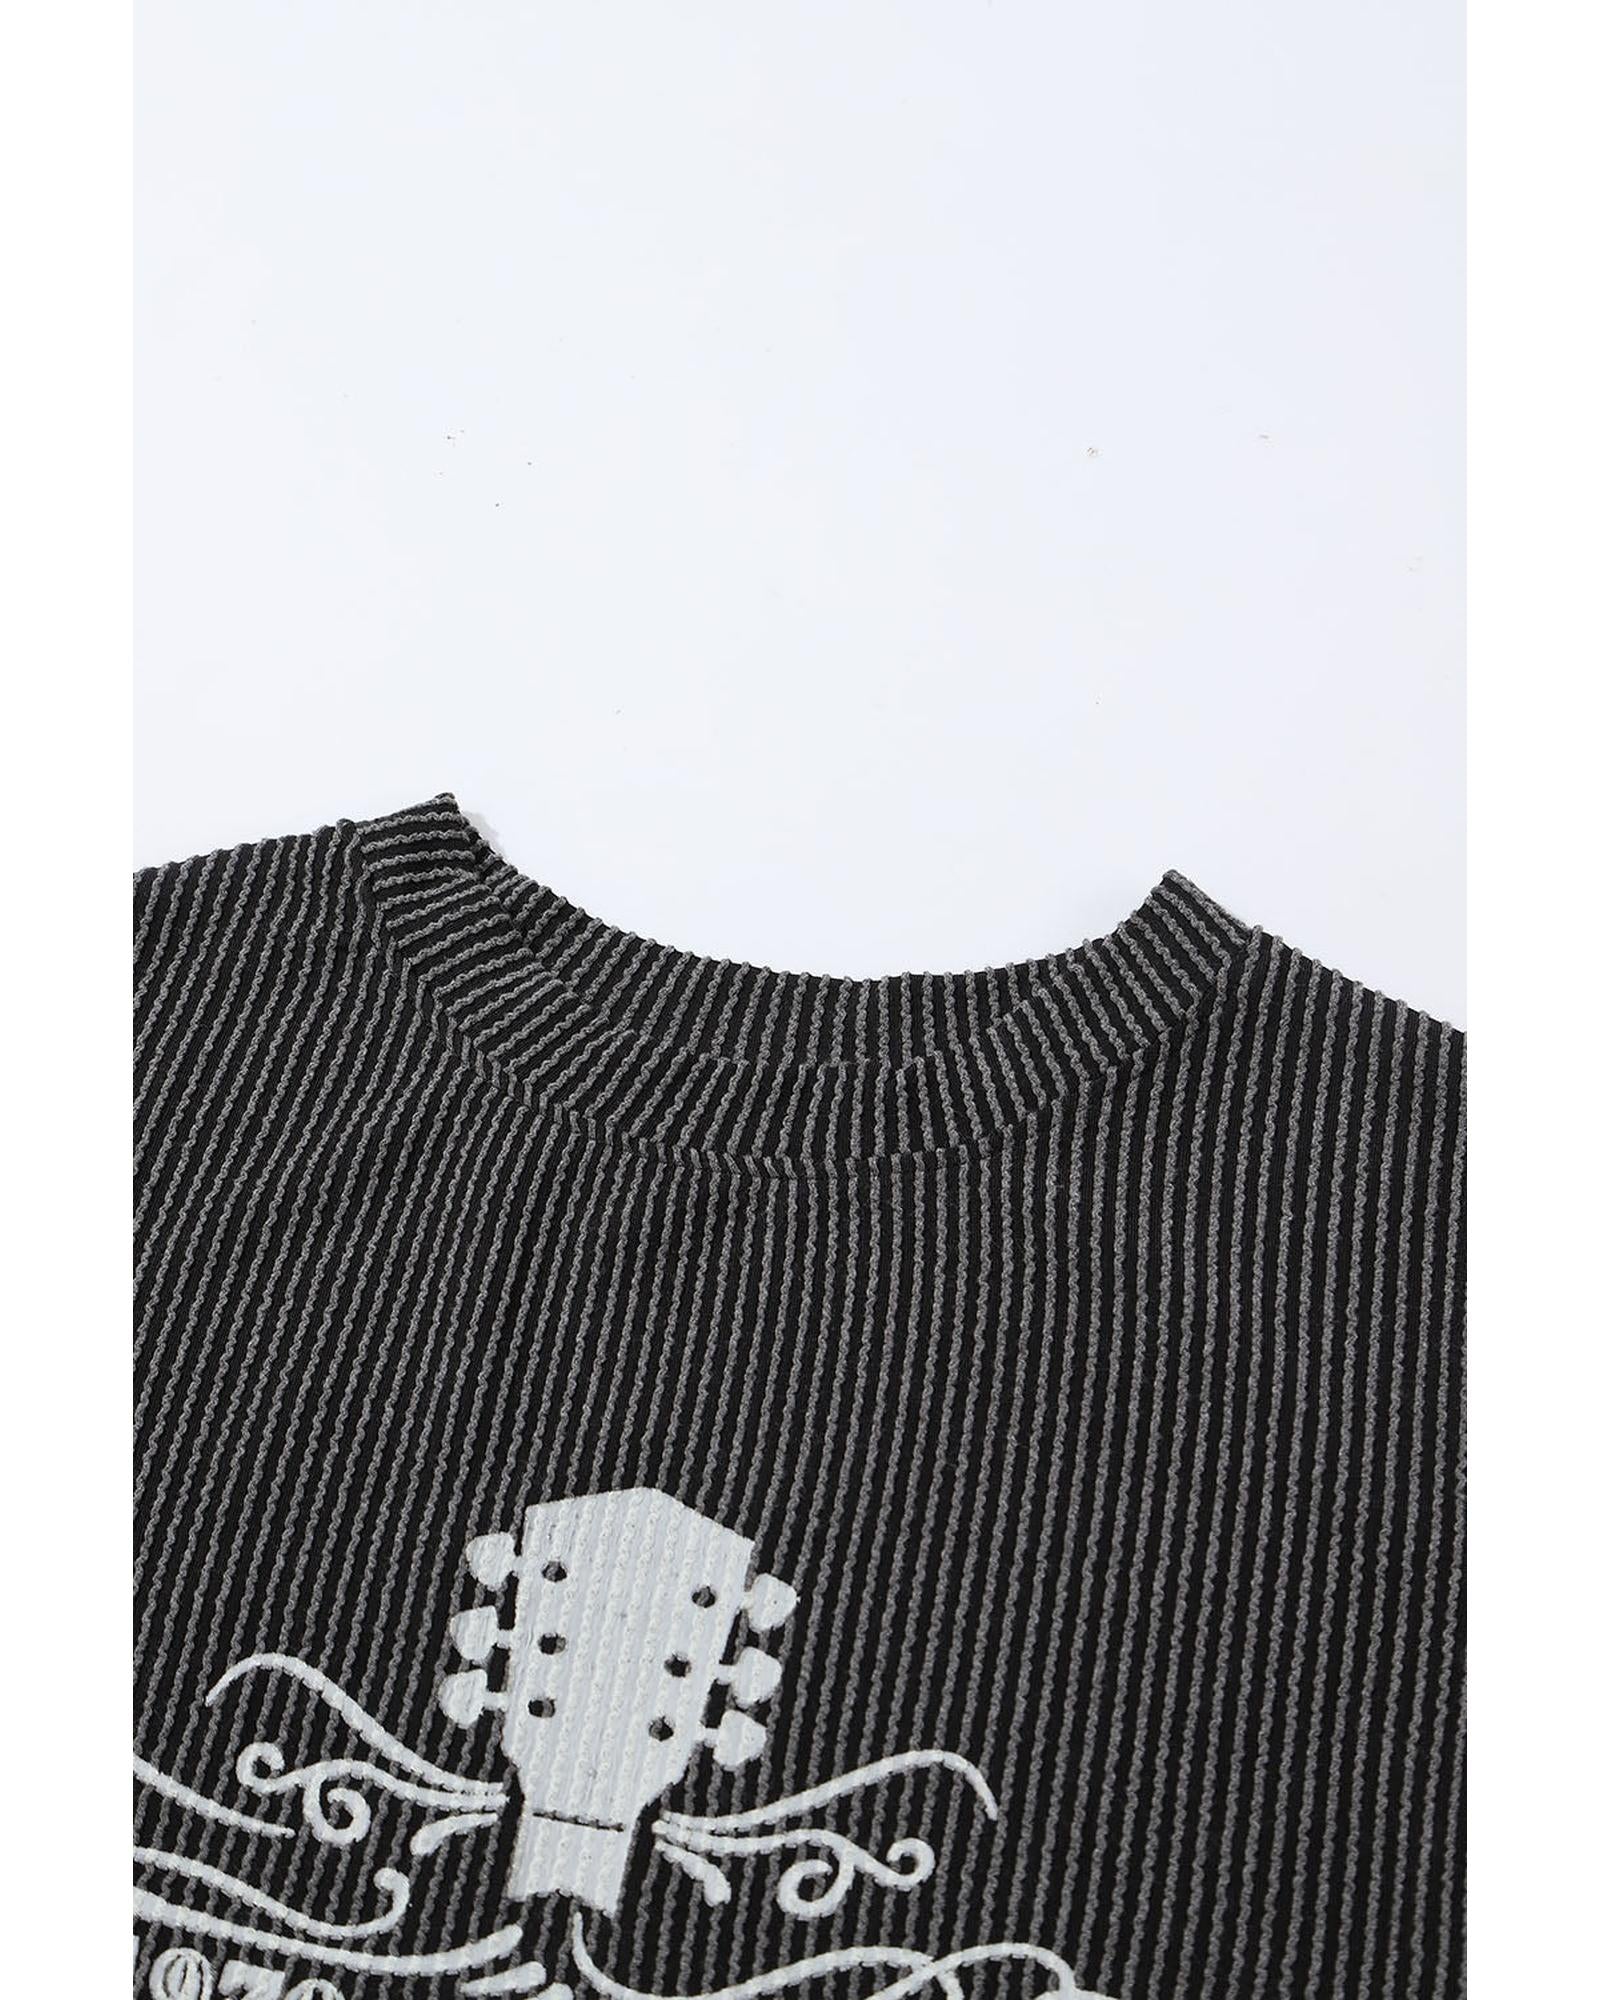 Azura Exchange NASHVILLE MUSIC CITY Corded Graphic Sweatshirt - S